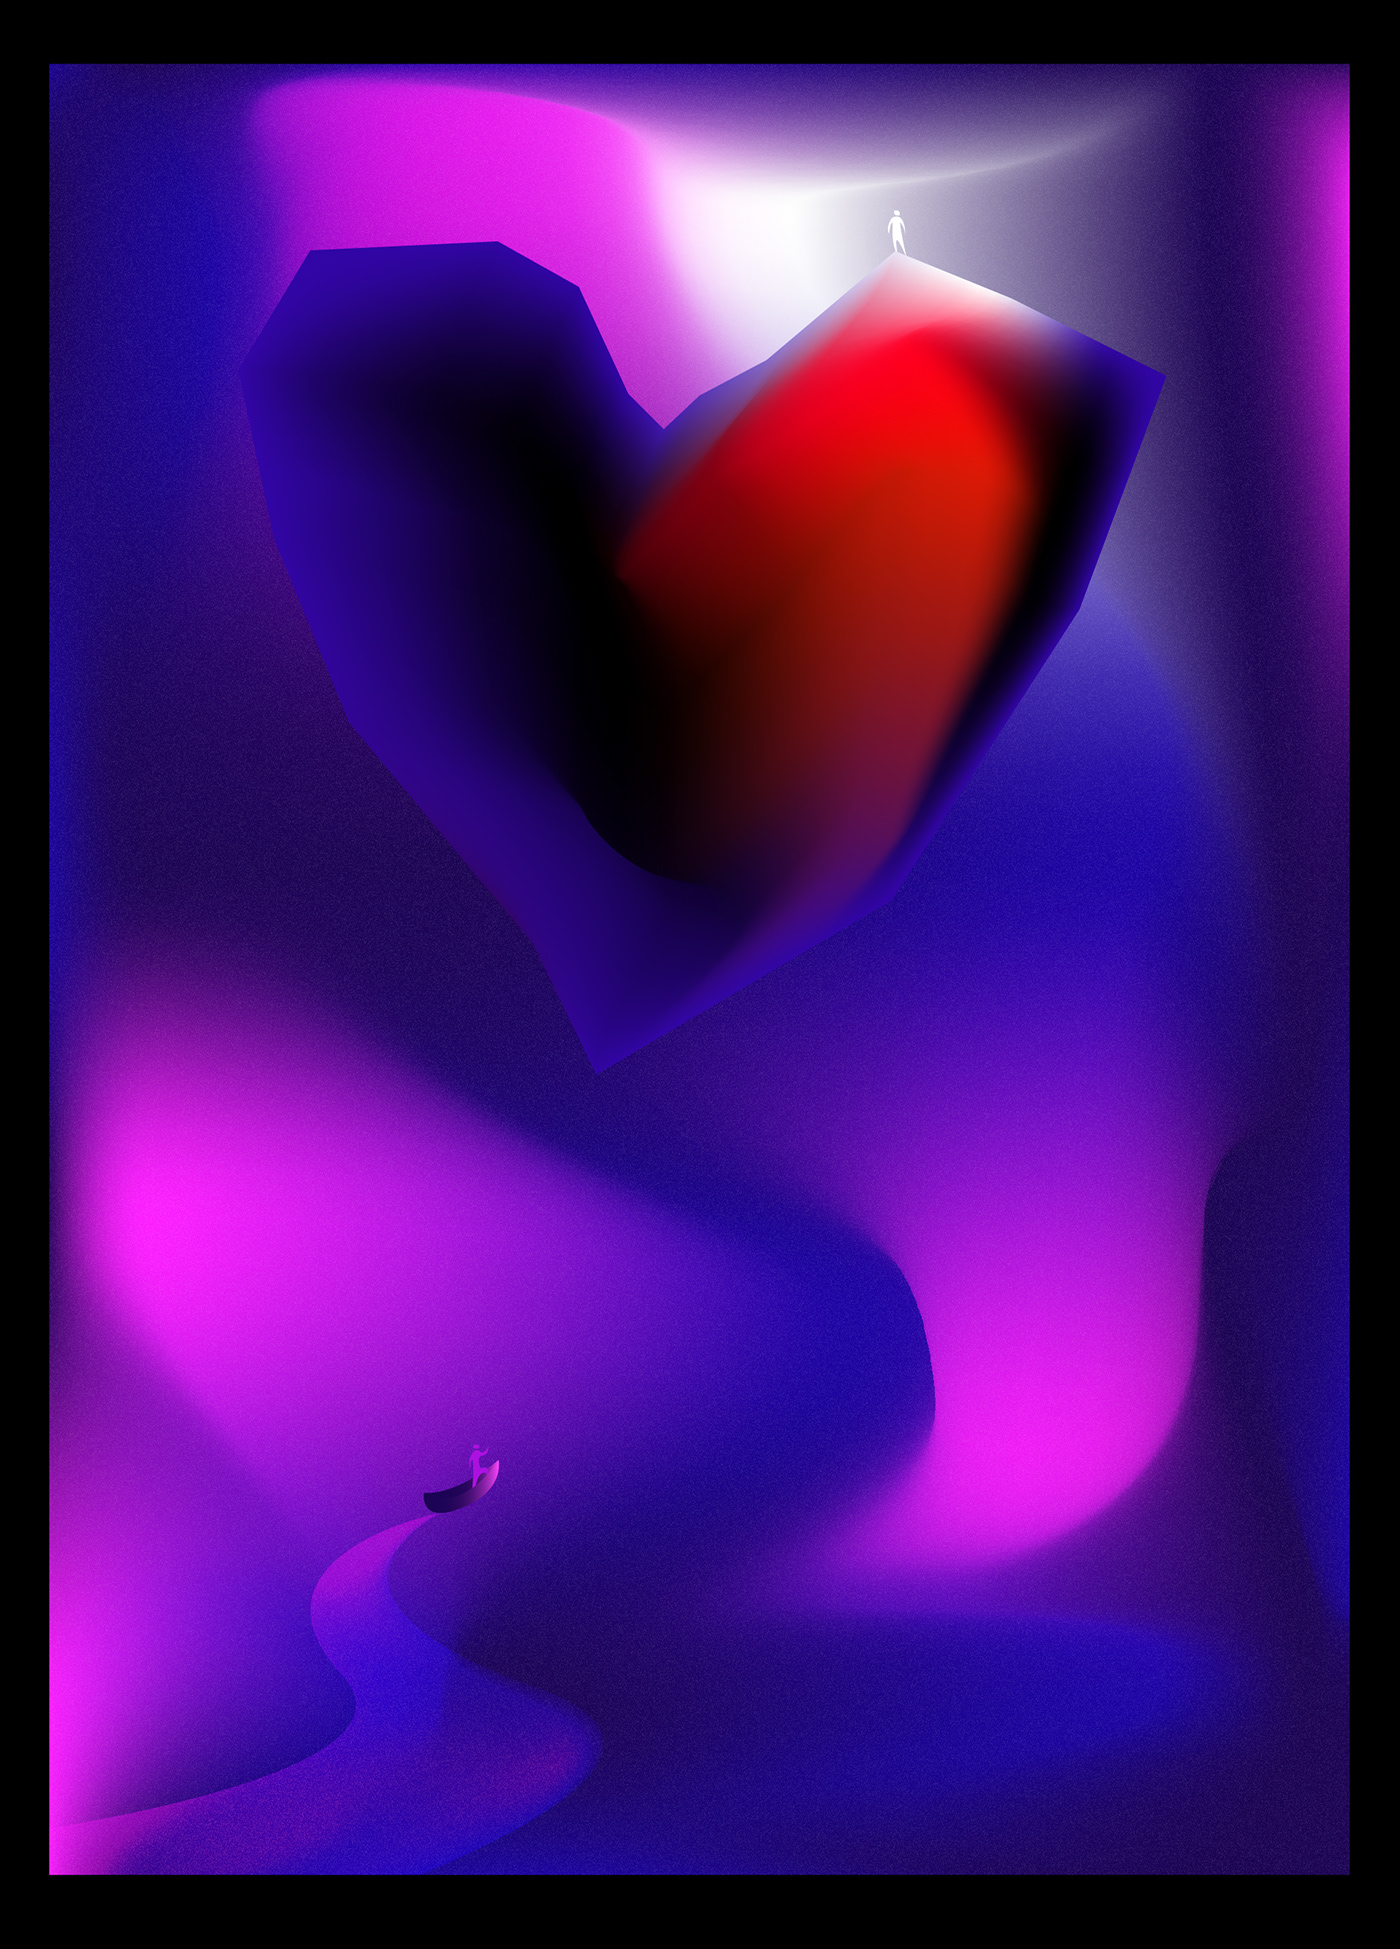 Digital Art  gradients graphic design  heart ILLUSTRATION  Illustrator Love symbolism Poetry  grain